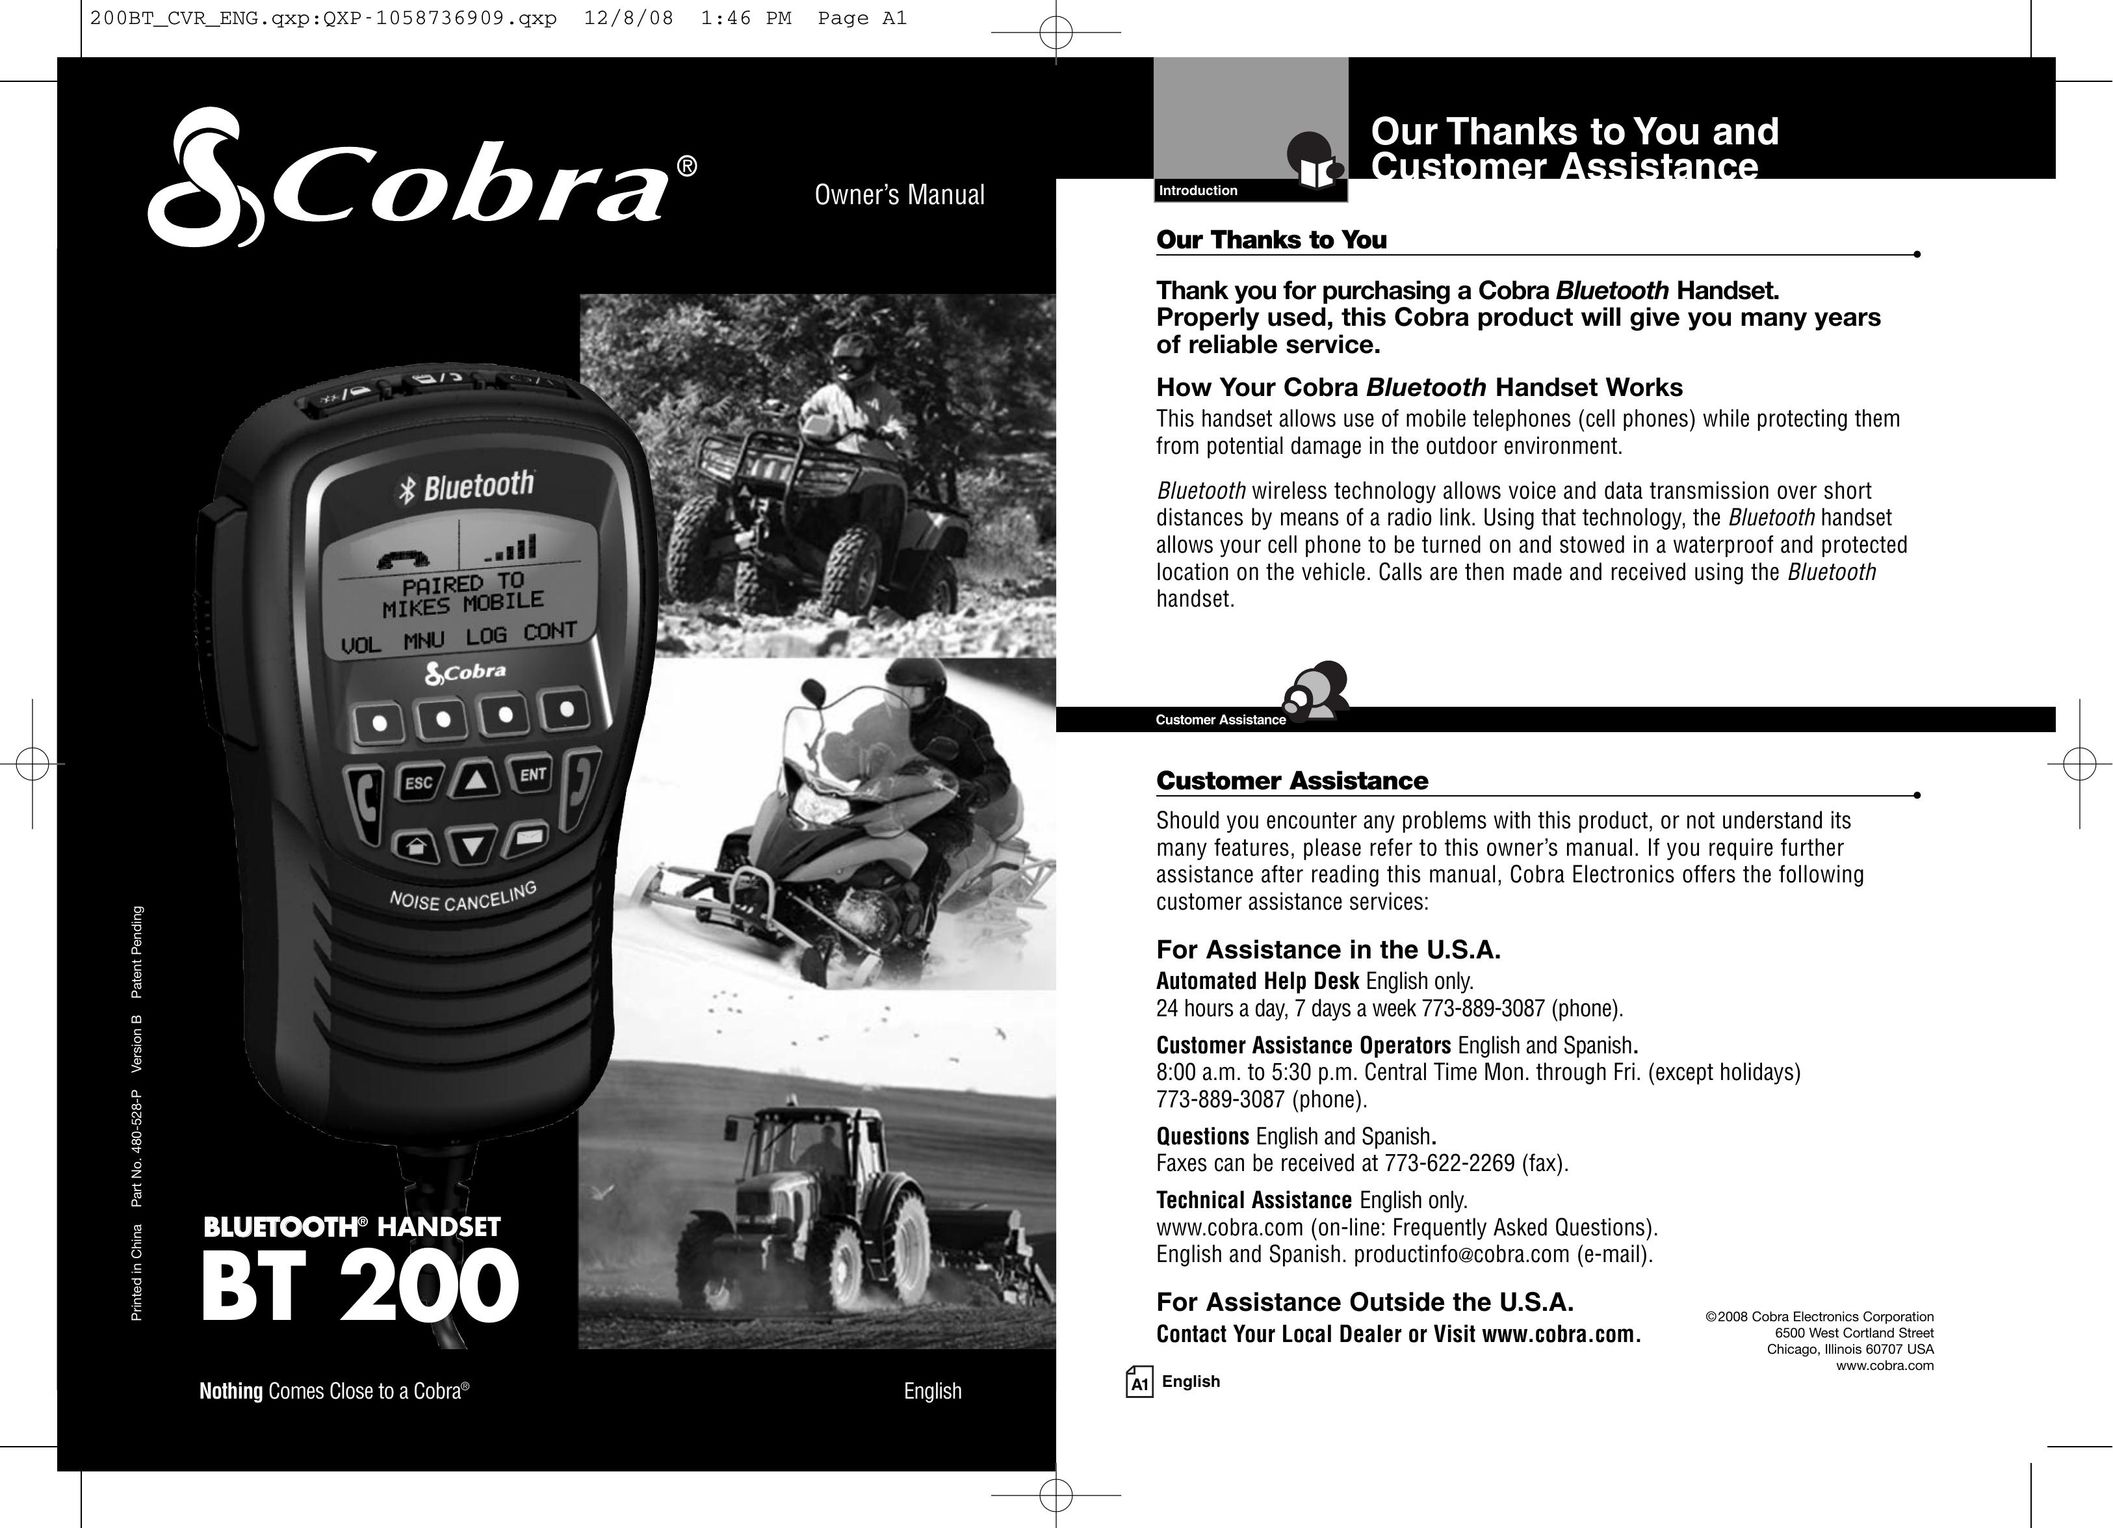 Cobra Digital BT 200 Bluetooth Headset User Manual